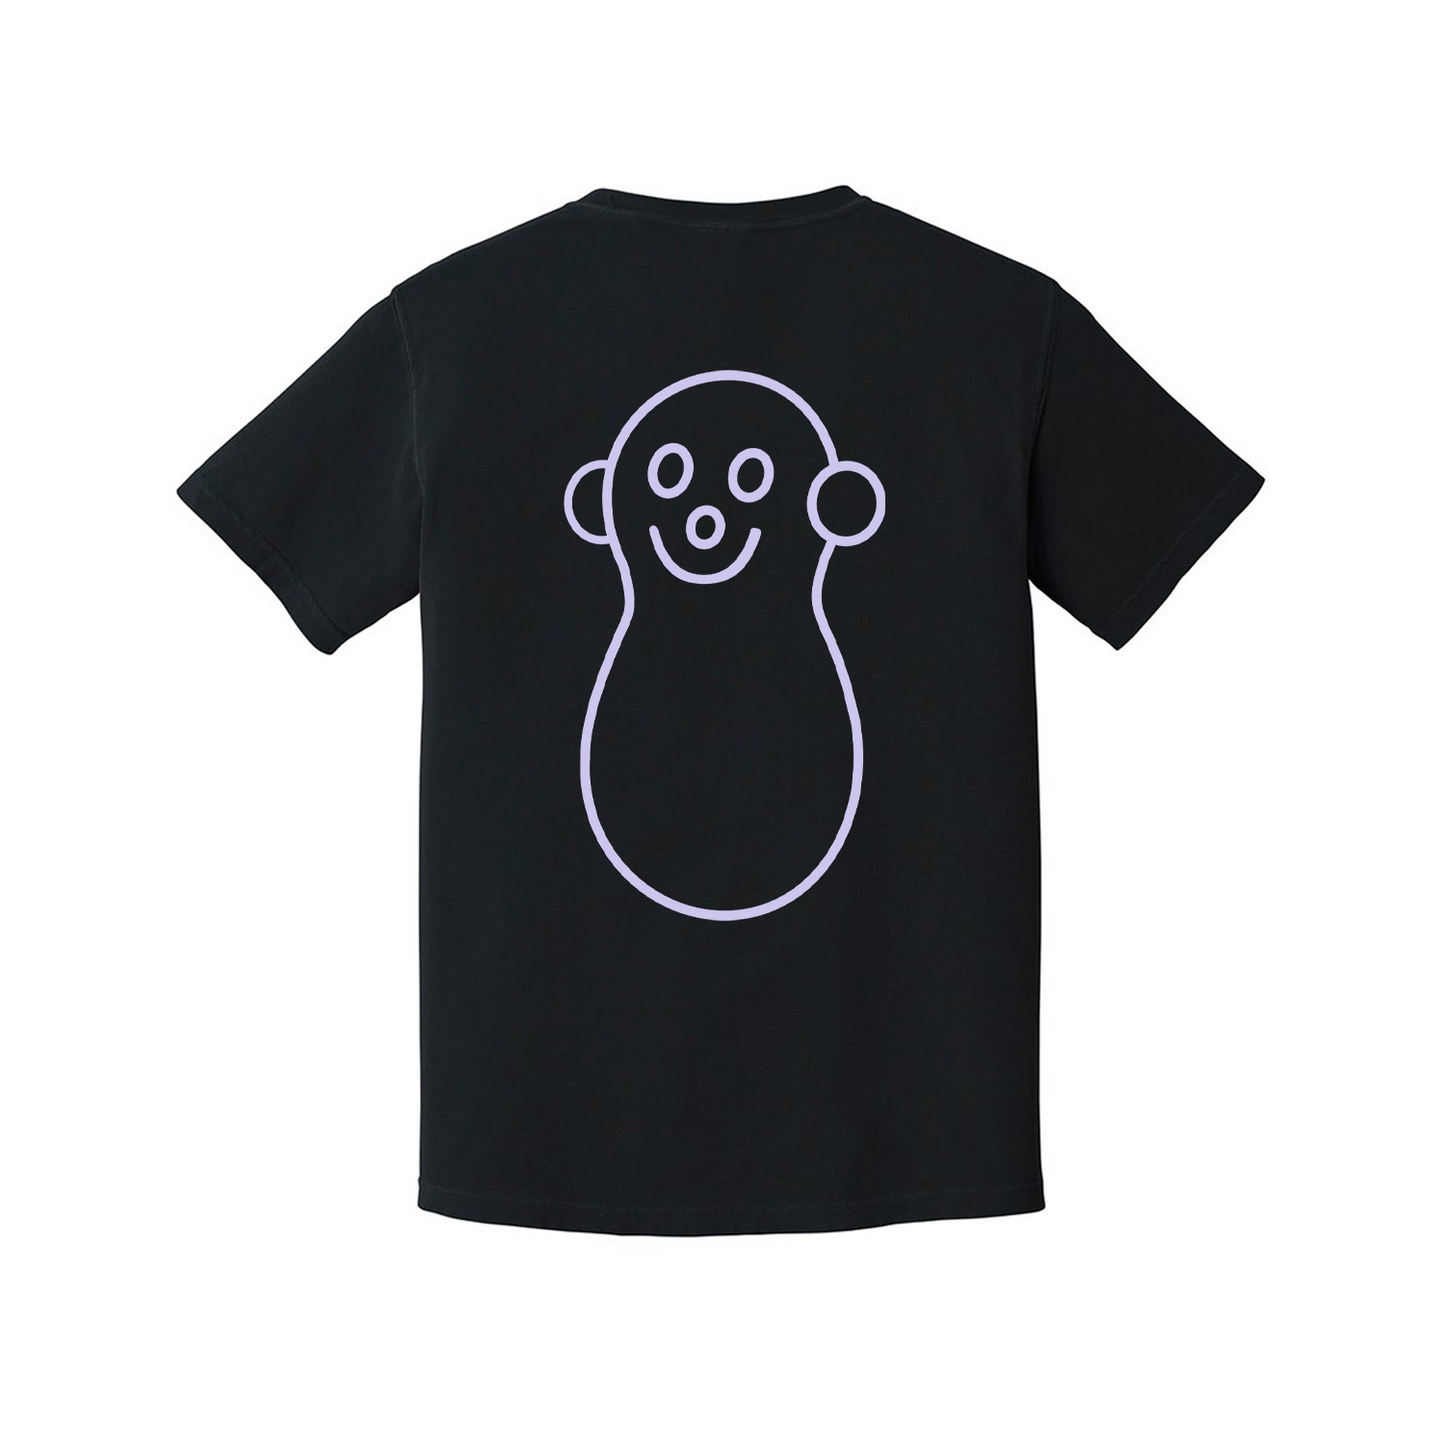 SQISHI "Logo" T-Shirt